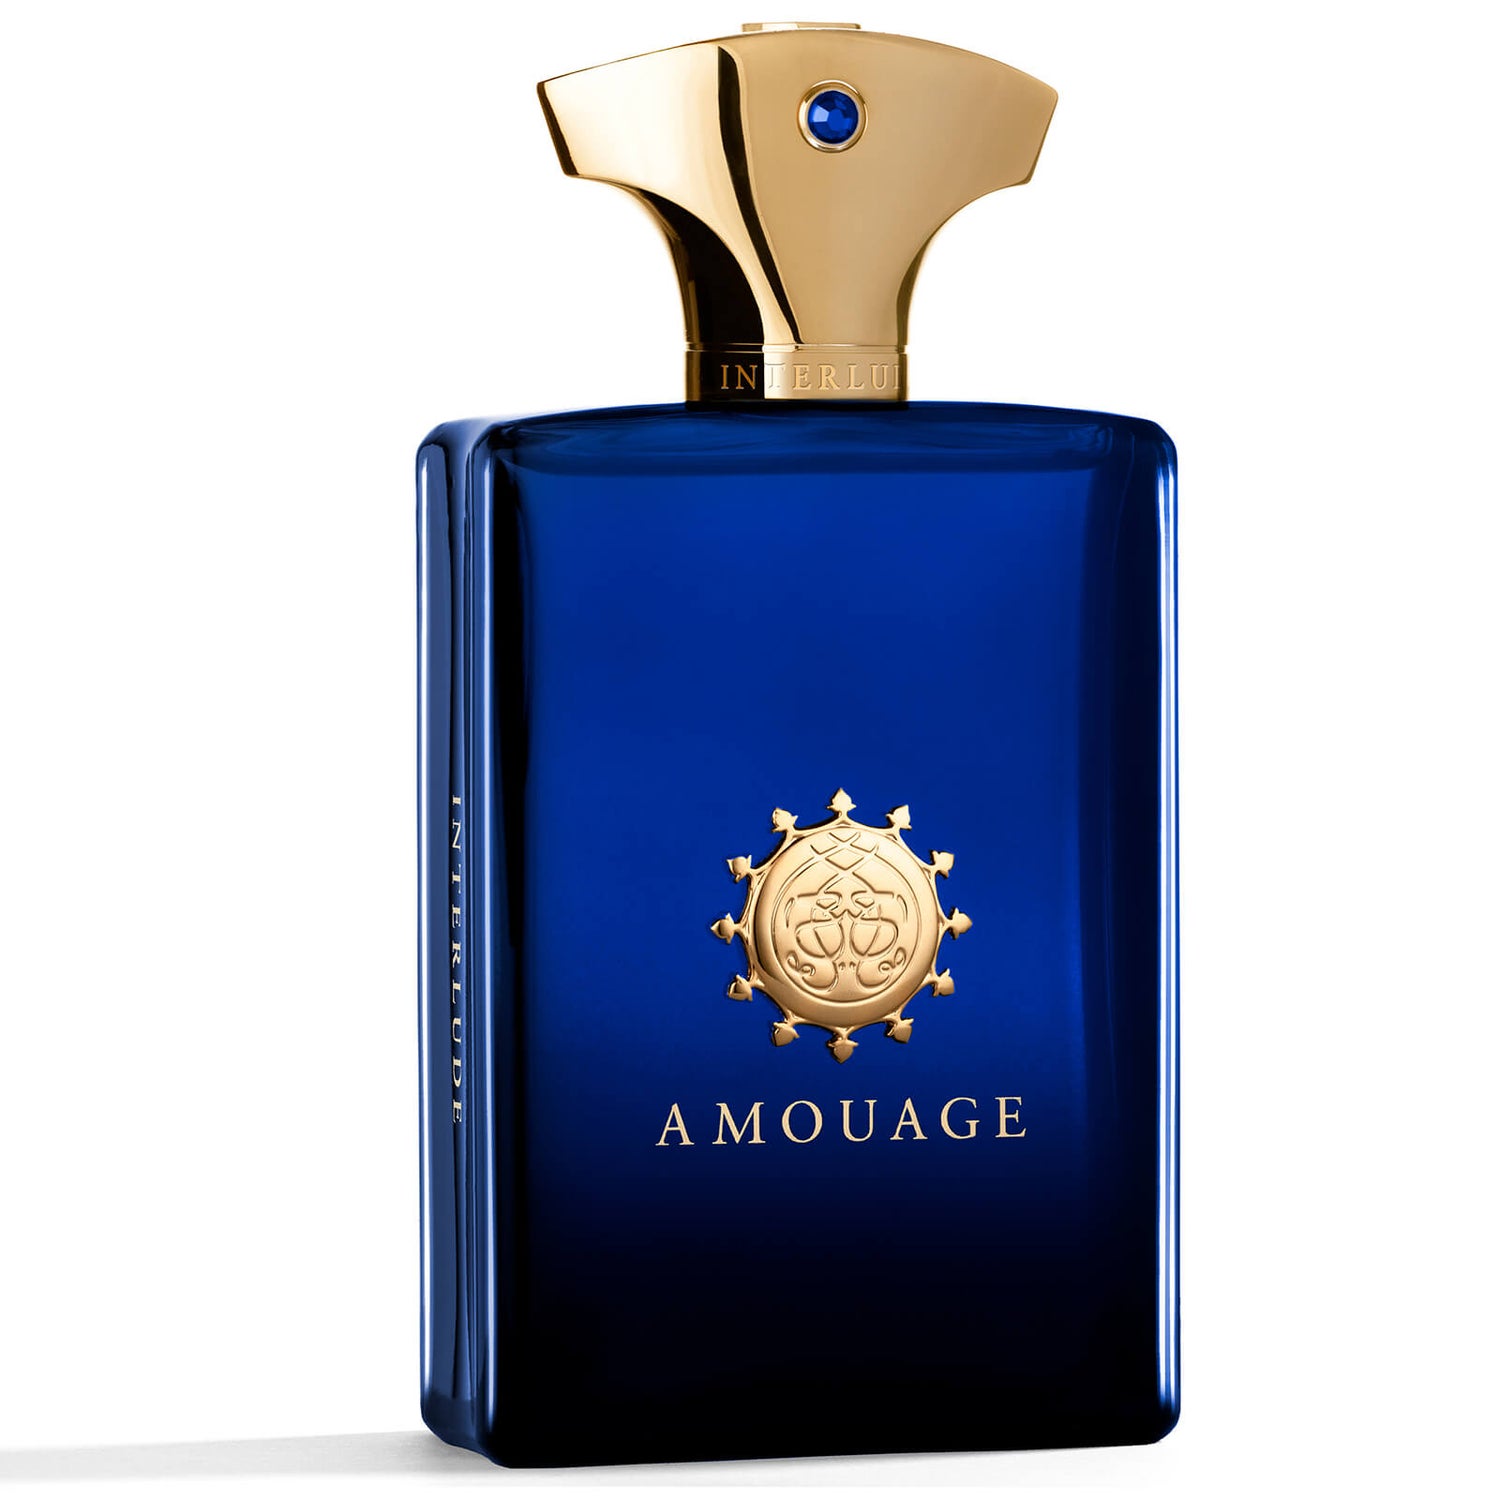 Amouage Interlude Man eau de parfum (100ml)